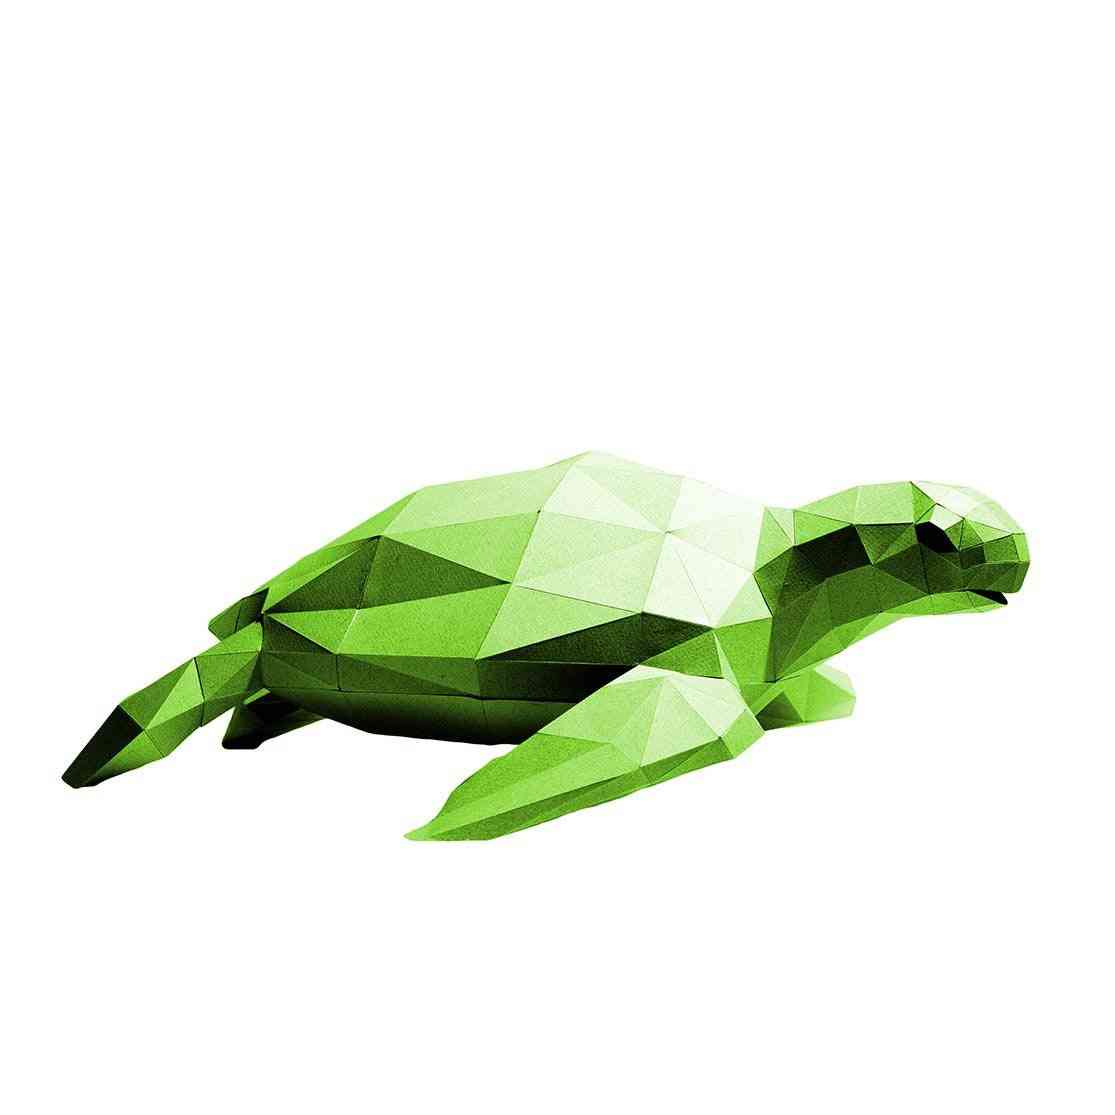 Modello di carta 3d tartaruga marina